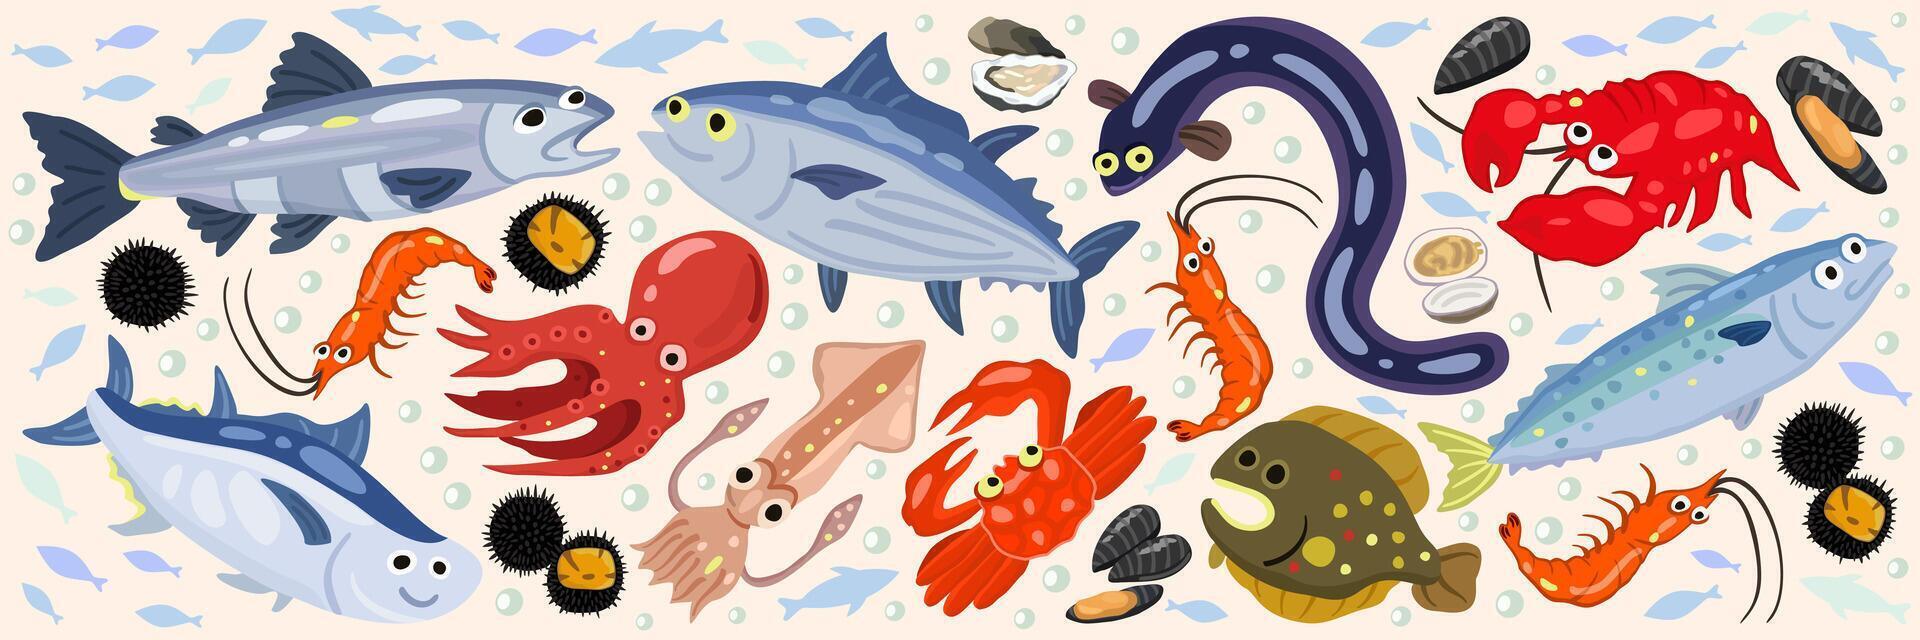 Vector cute set of marine animals. Salmon, bonito, freshwater eel, tuna, octopus, mackerel, squid, flounder, shrimps, crab, lobster